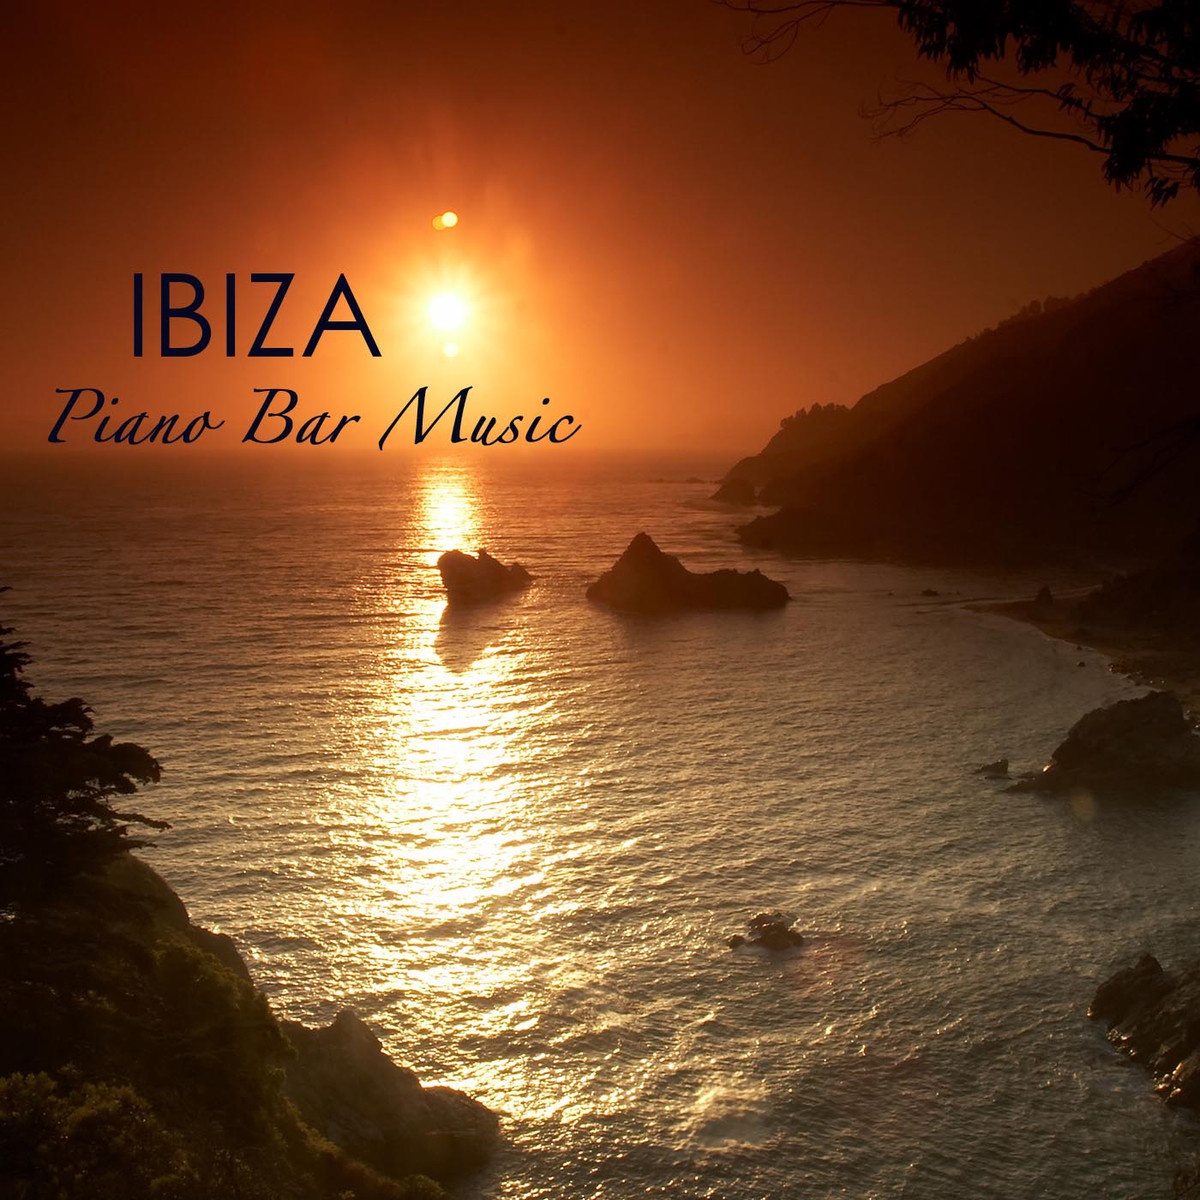 Ibiza Piano Bar Music: Buddha Piano Lounge Cafè Soft Songs Ibiza Beach Party 2013 at Sunset Time